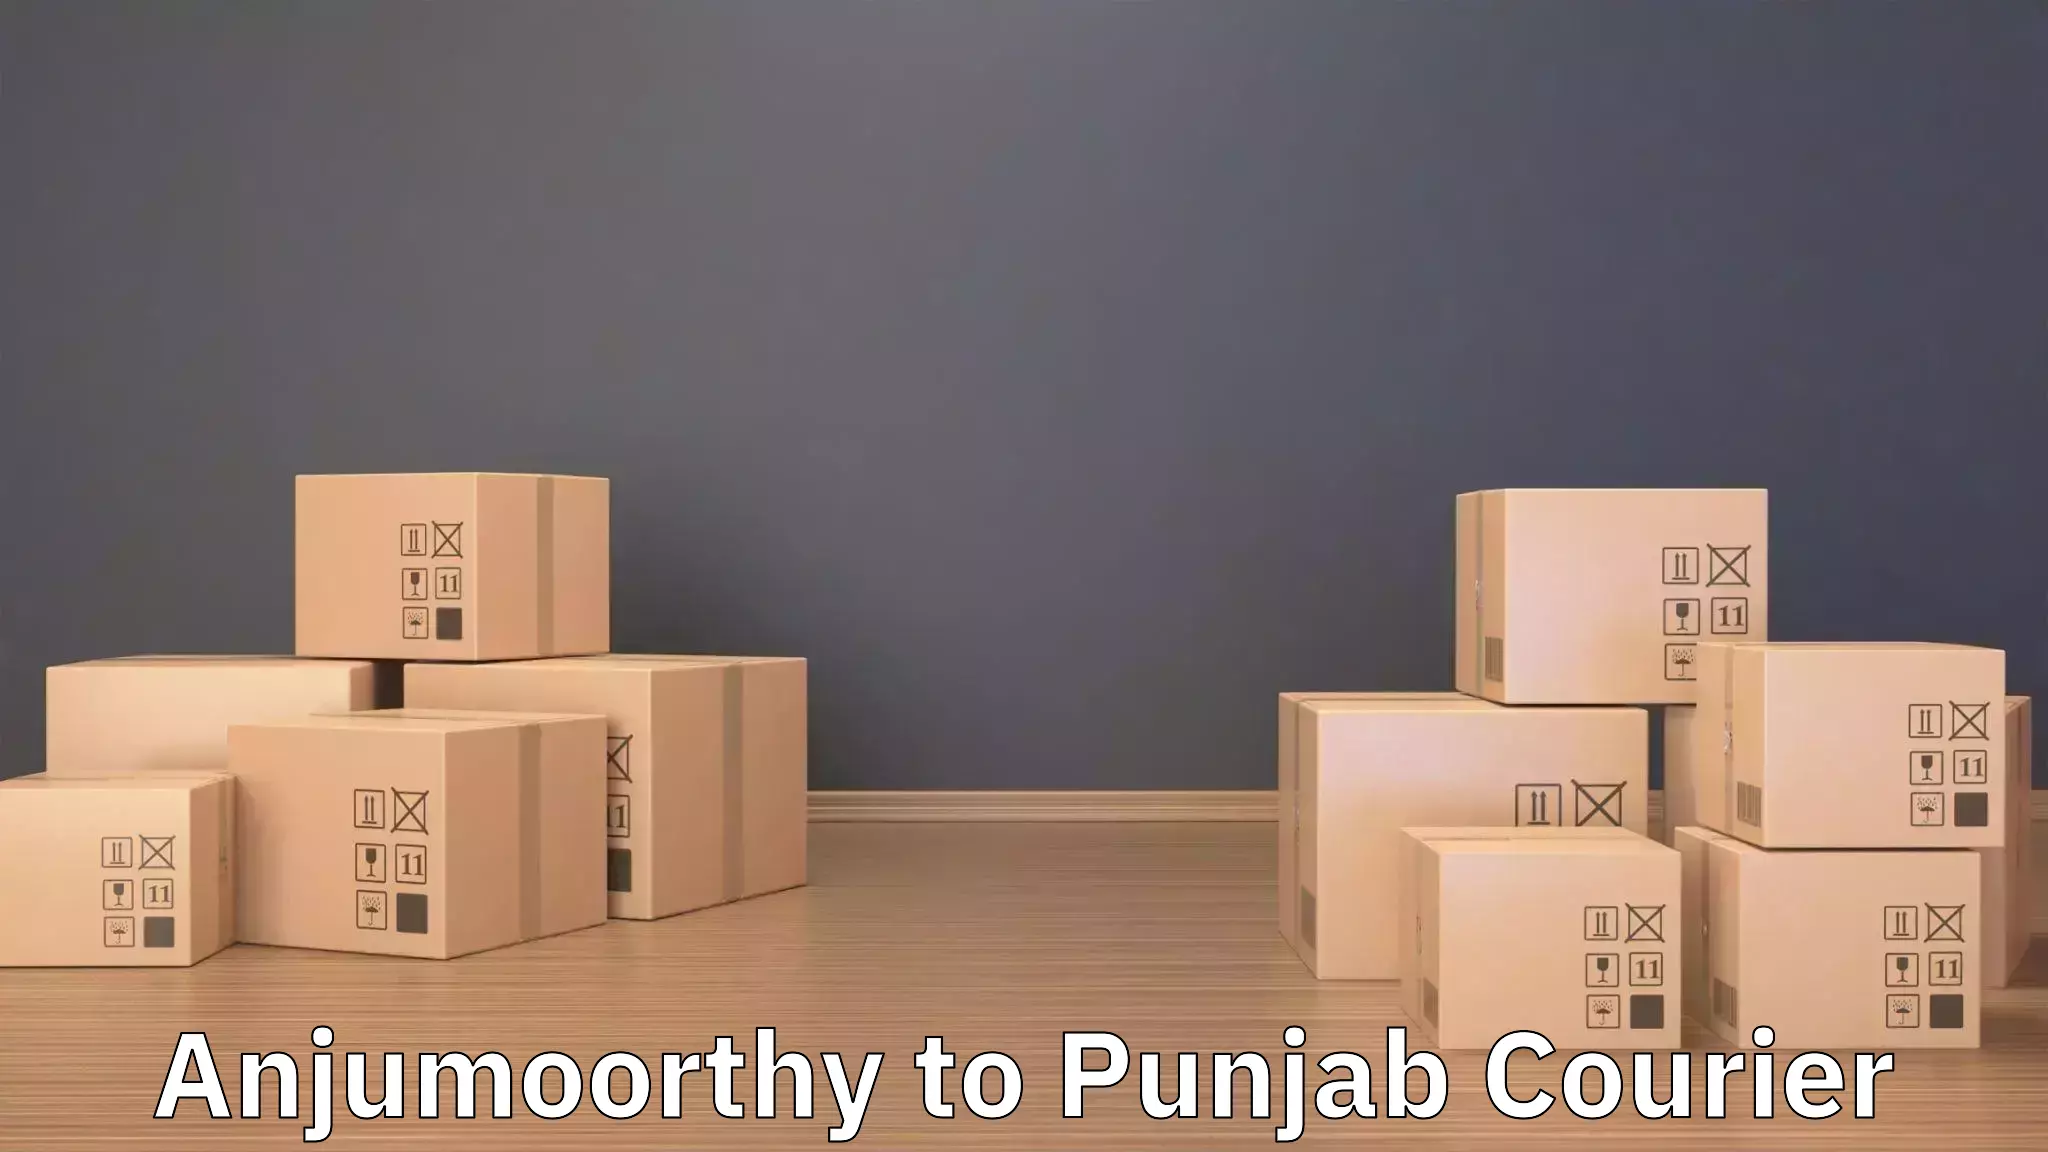 Premium moving services Anjumoorthy to Punjab